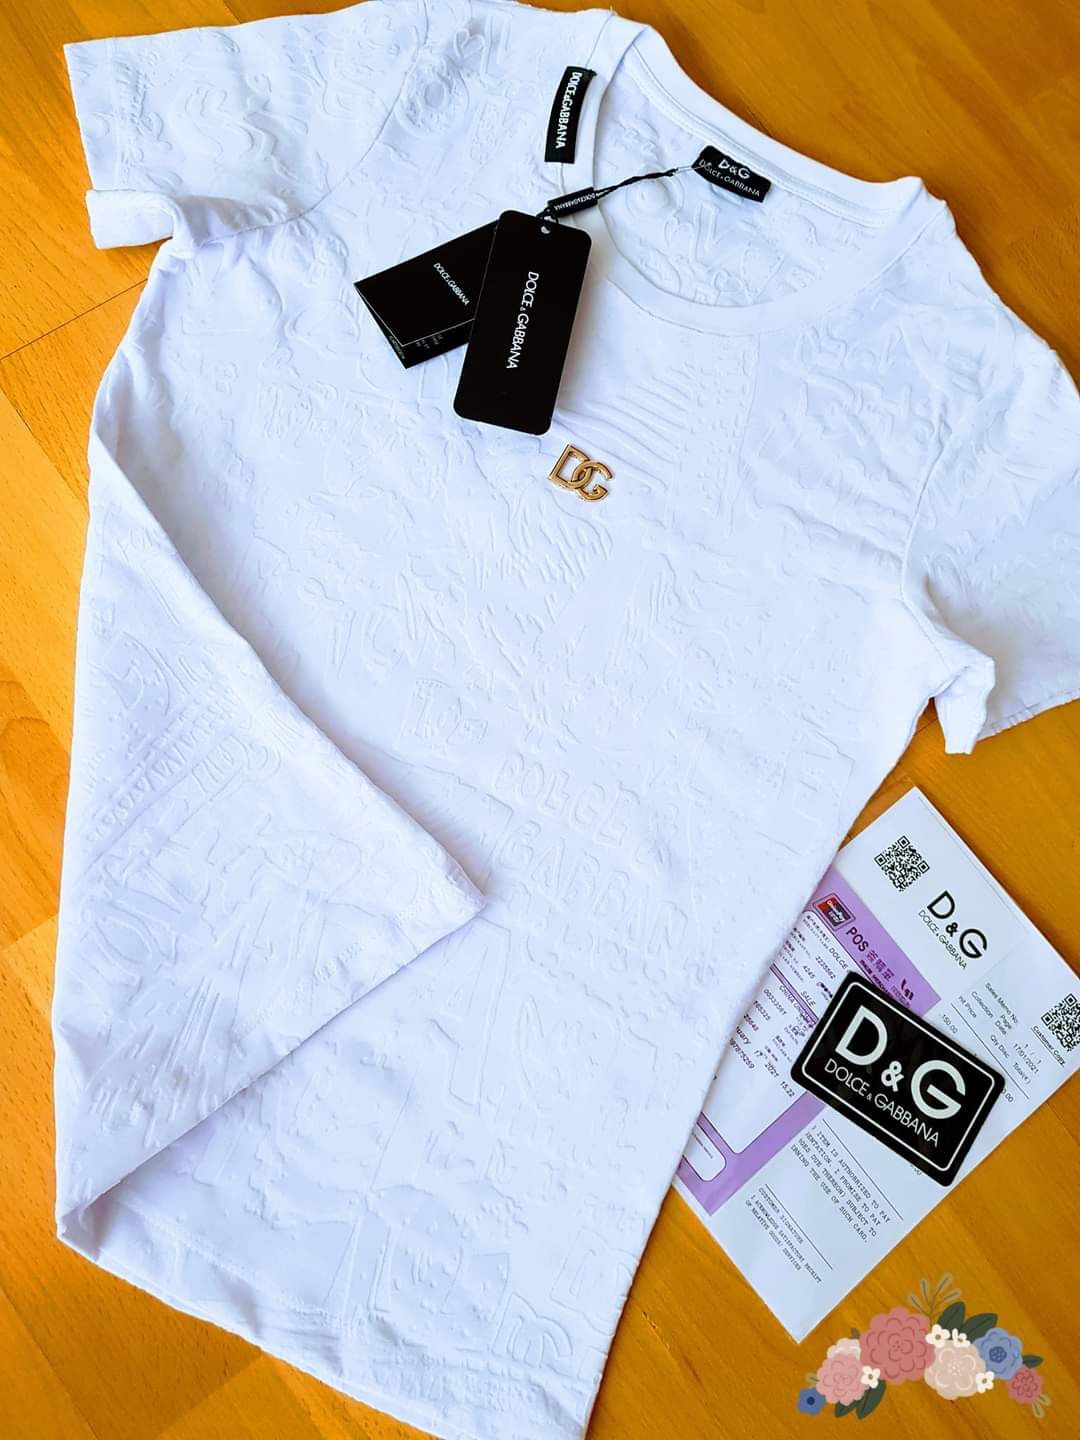 Tricouri DG,inserții catifea,logo metalic, co Qr,eticheta